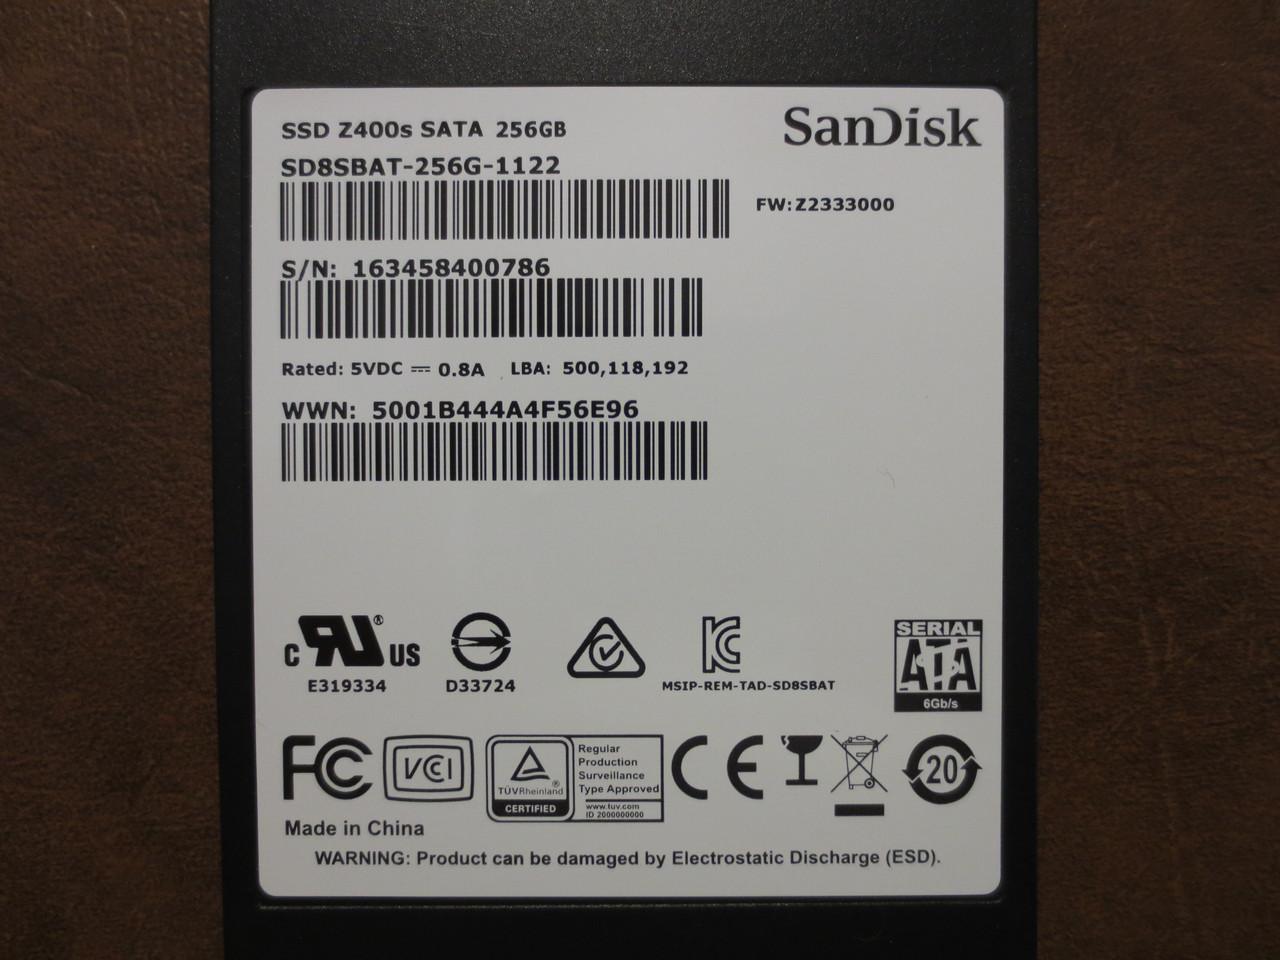 SanDisk SD8SBAT-256G-1122 FW:Z2333000 256gb Sata SSD - Effective Electronics